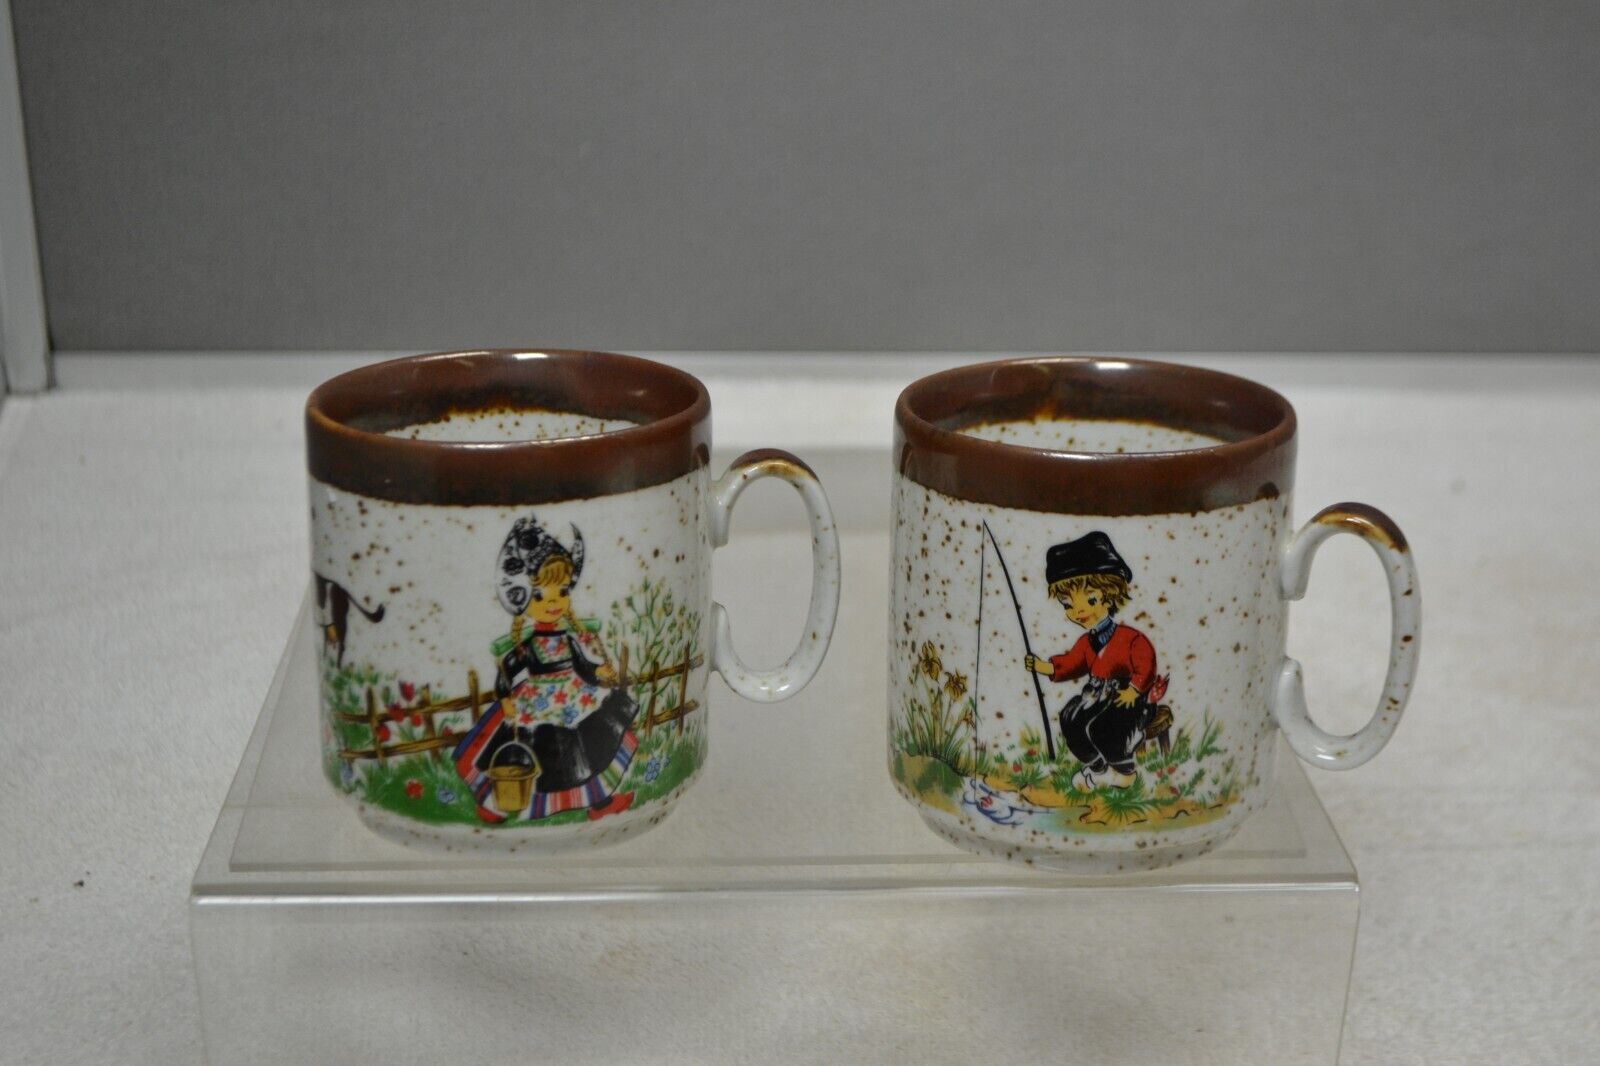 Vintage cups, Little boy ^ Little girl cup set of 2